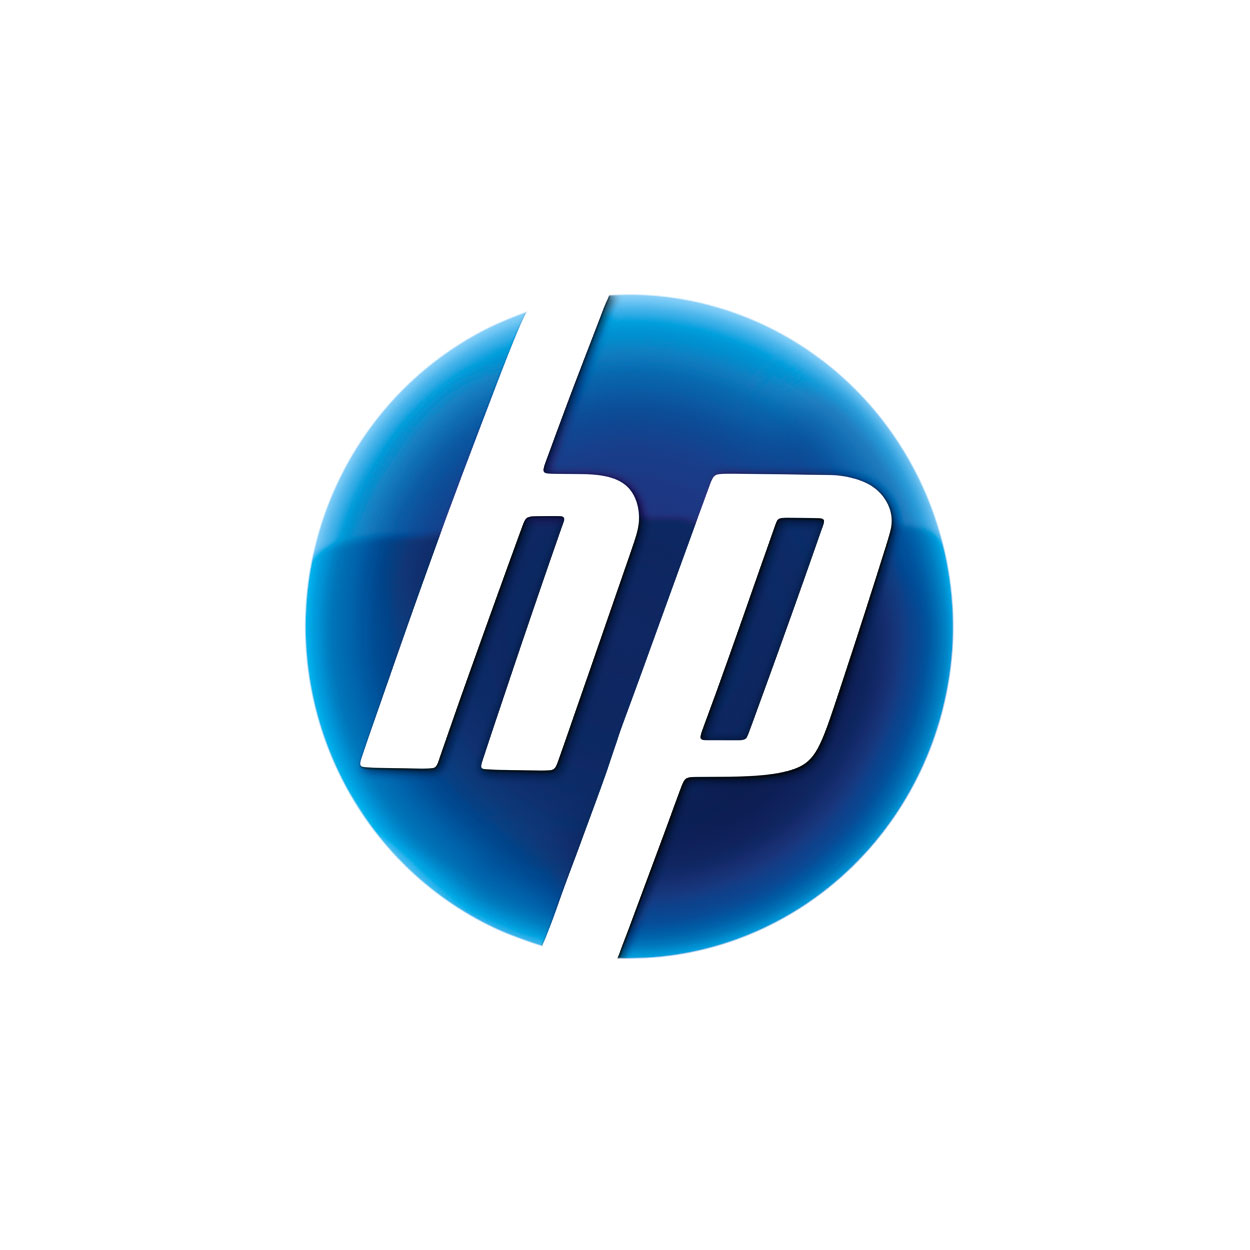 HP brand